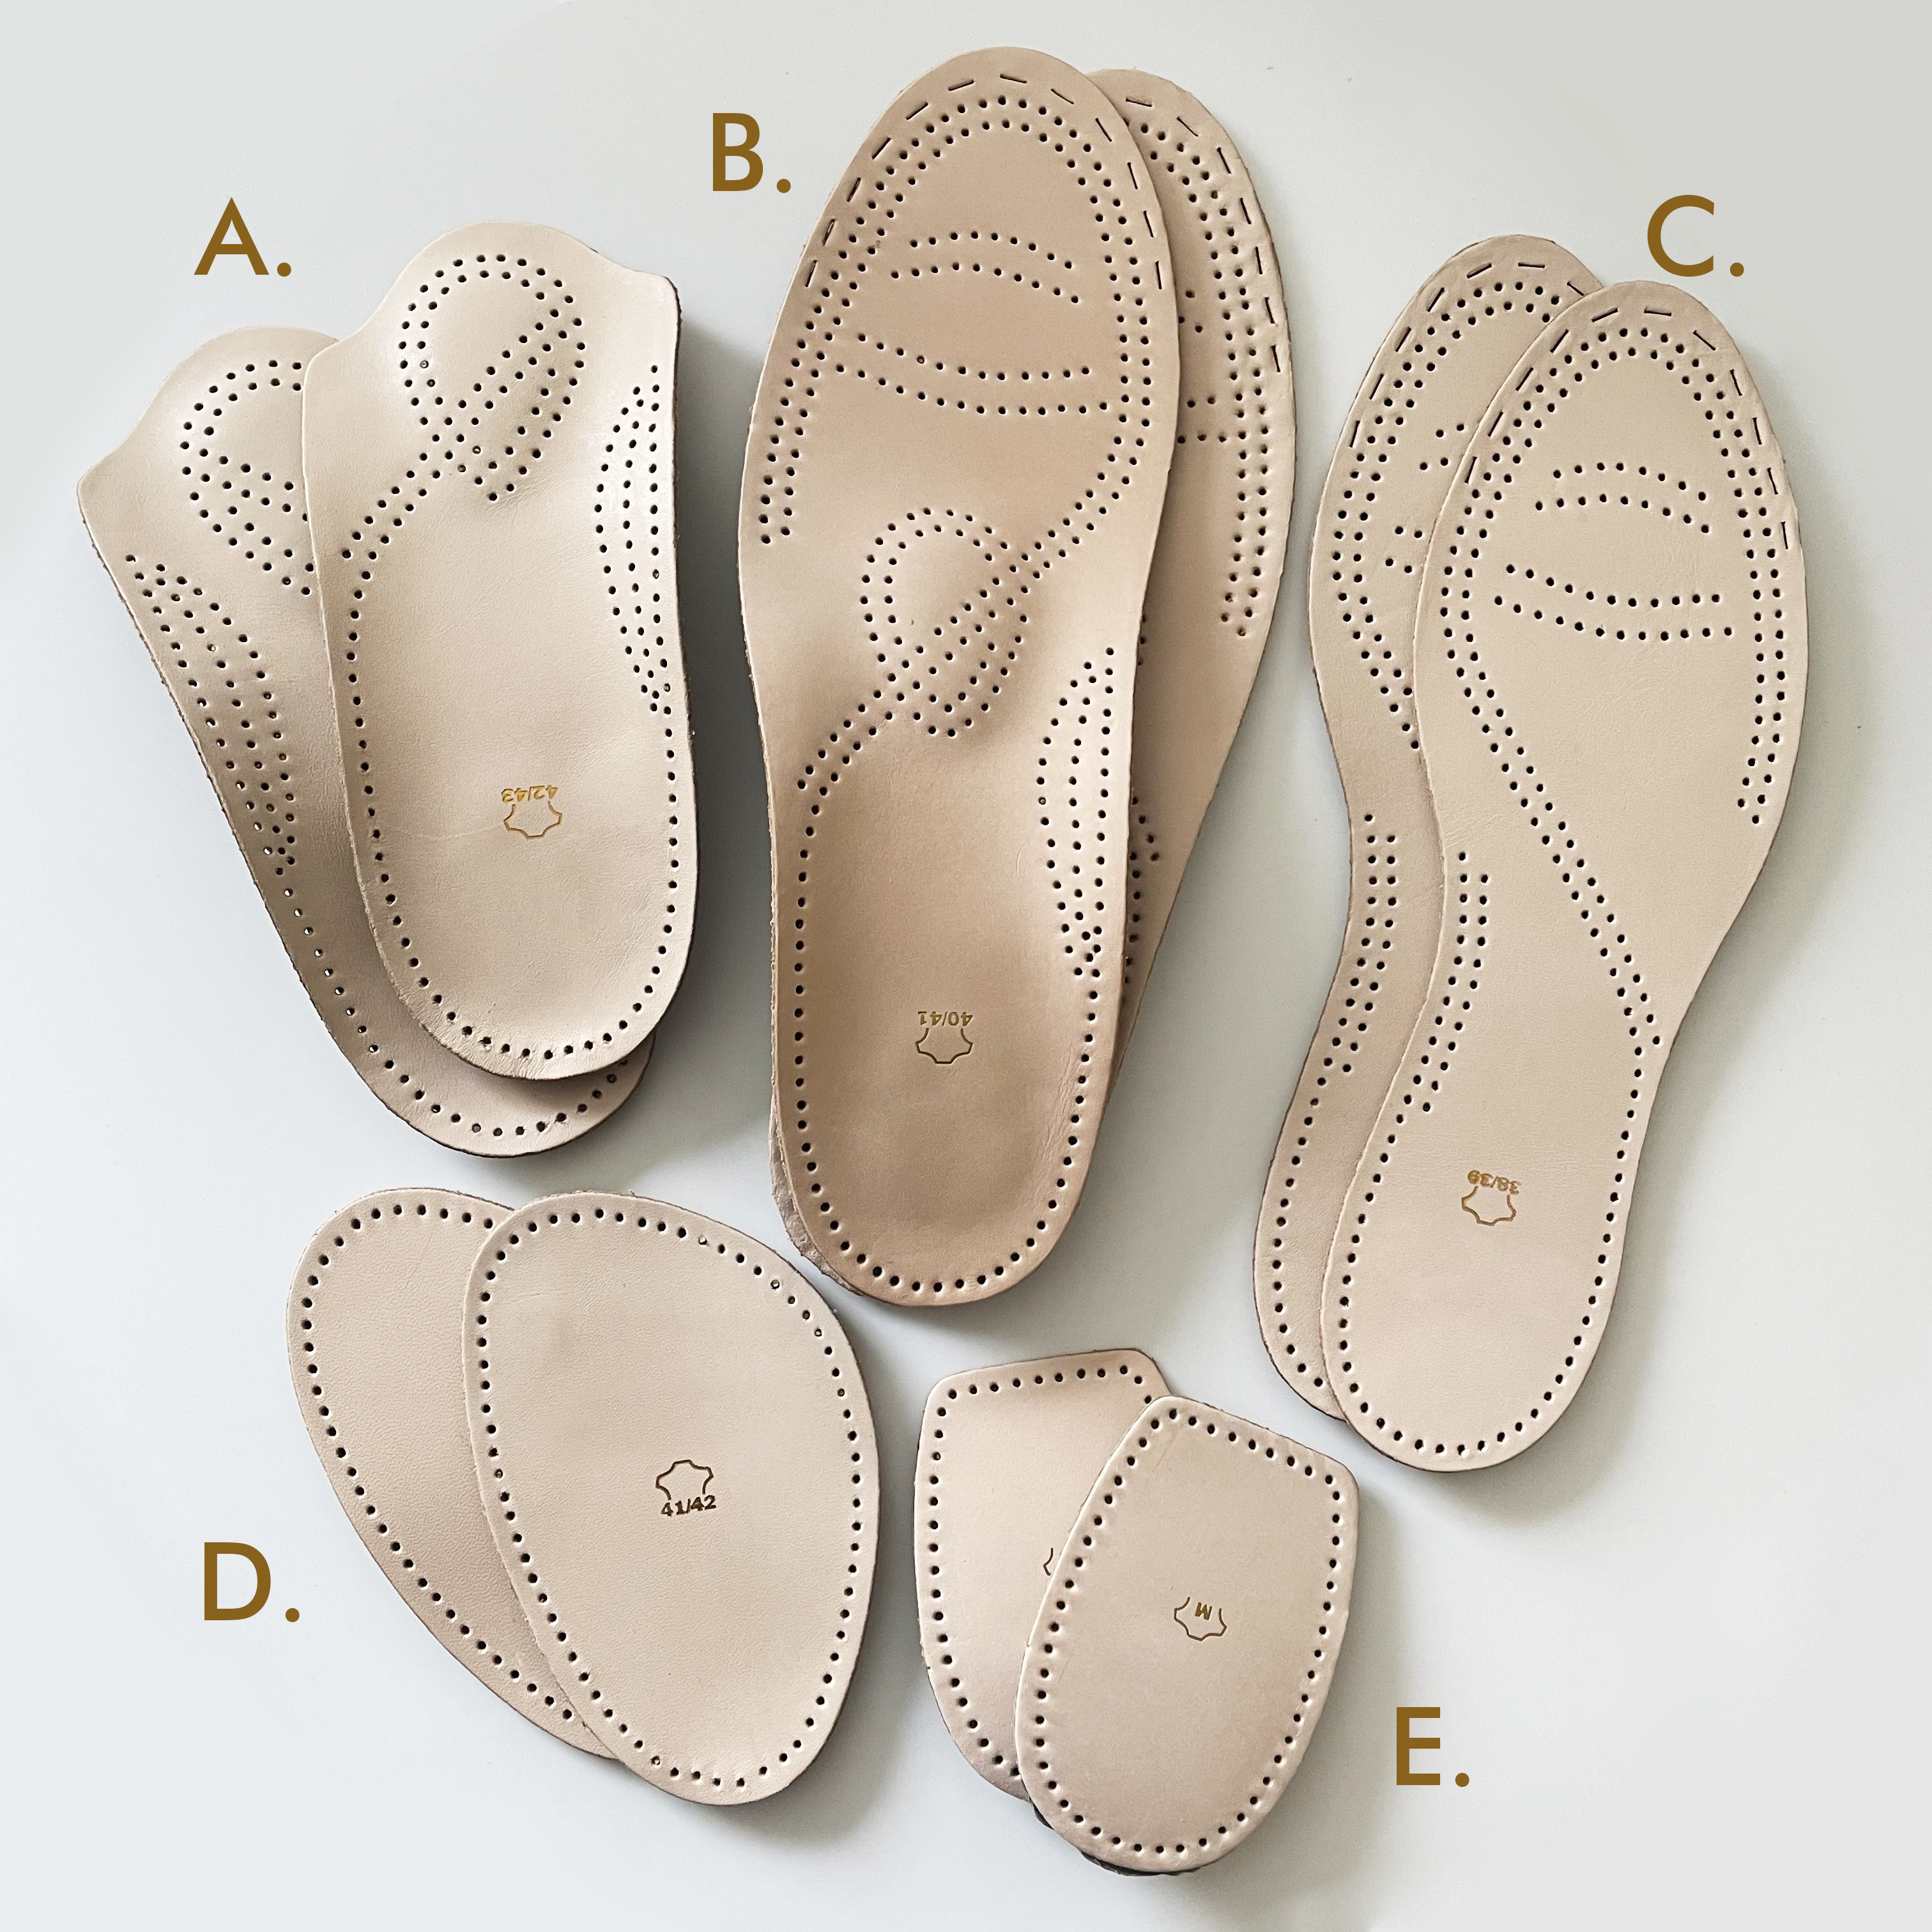 Кожни уложак за равне ципеле подржава лук 3/4 улошка за ципеле